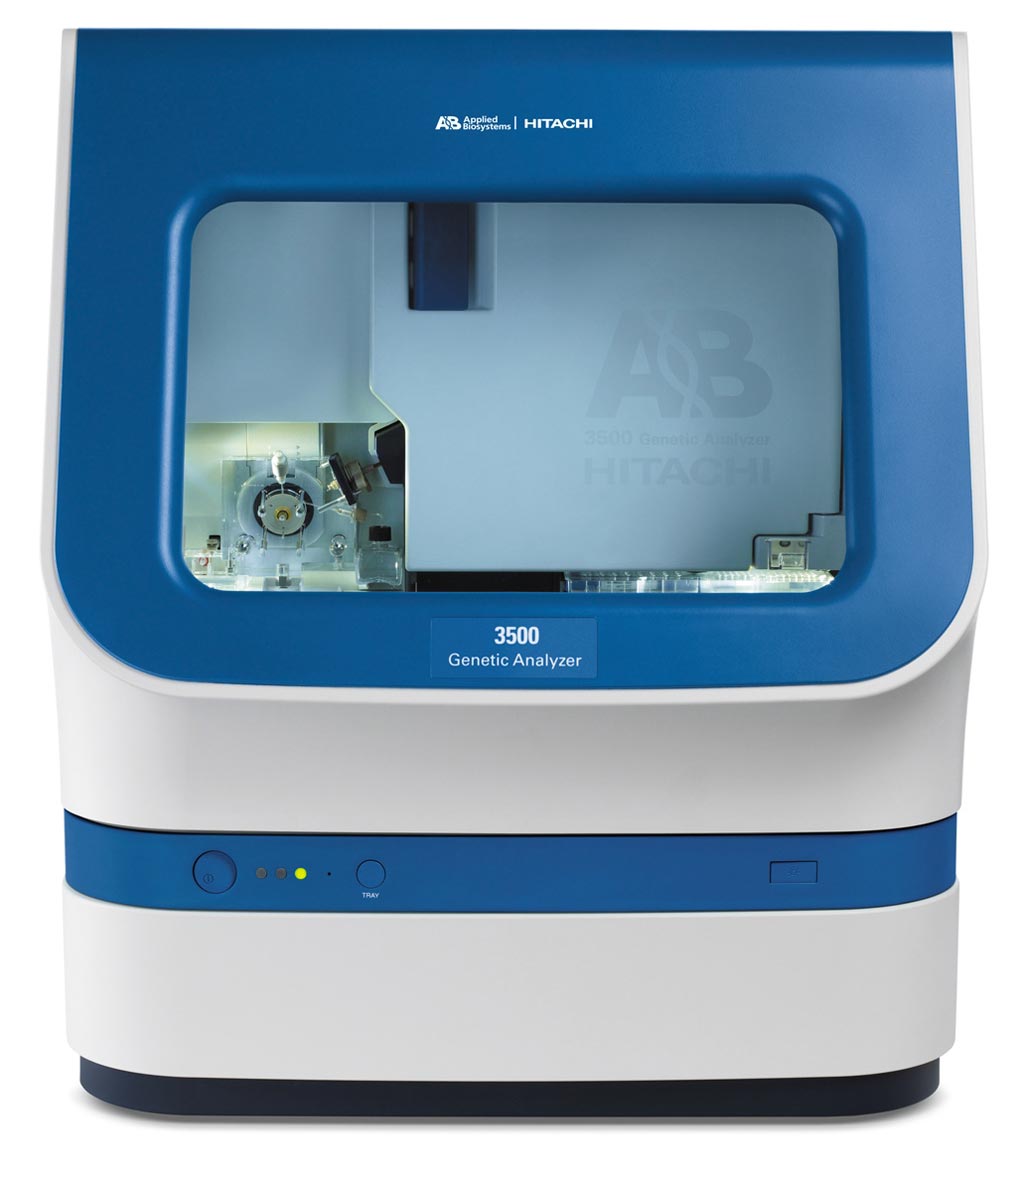 Image: The ABI-Prism 3500 genetic analyzer (Photo courtesy of Applied Biosystems).